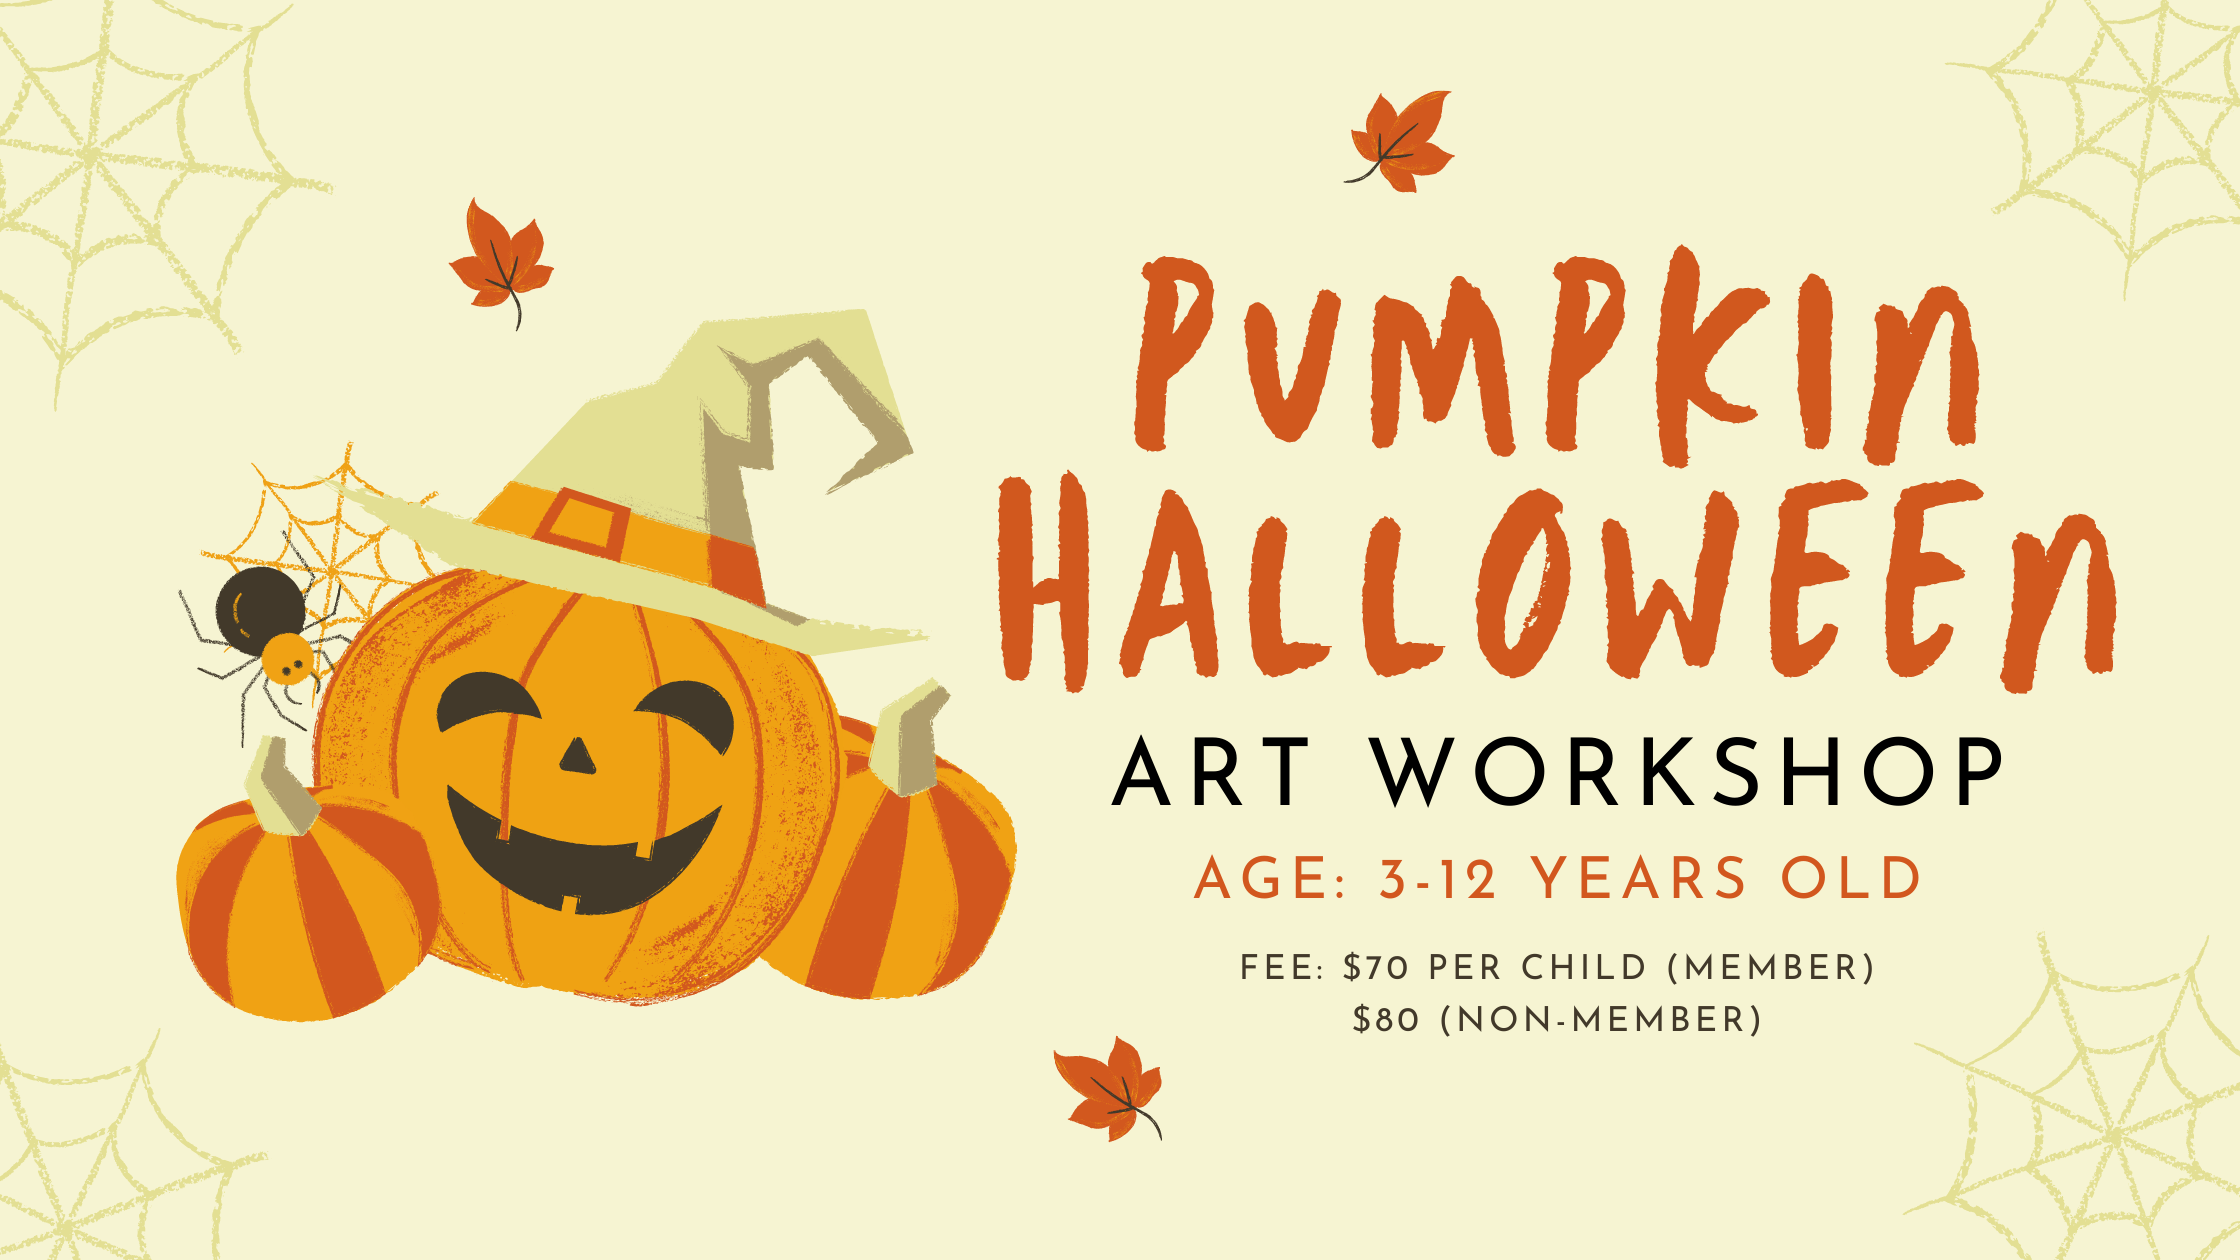 Pumpkin Halloween Art workshop